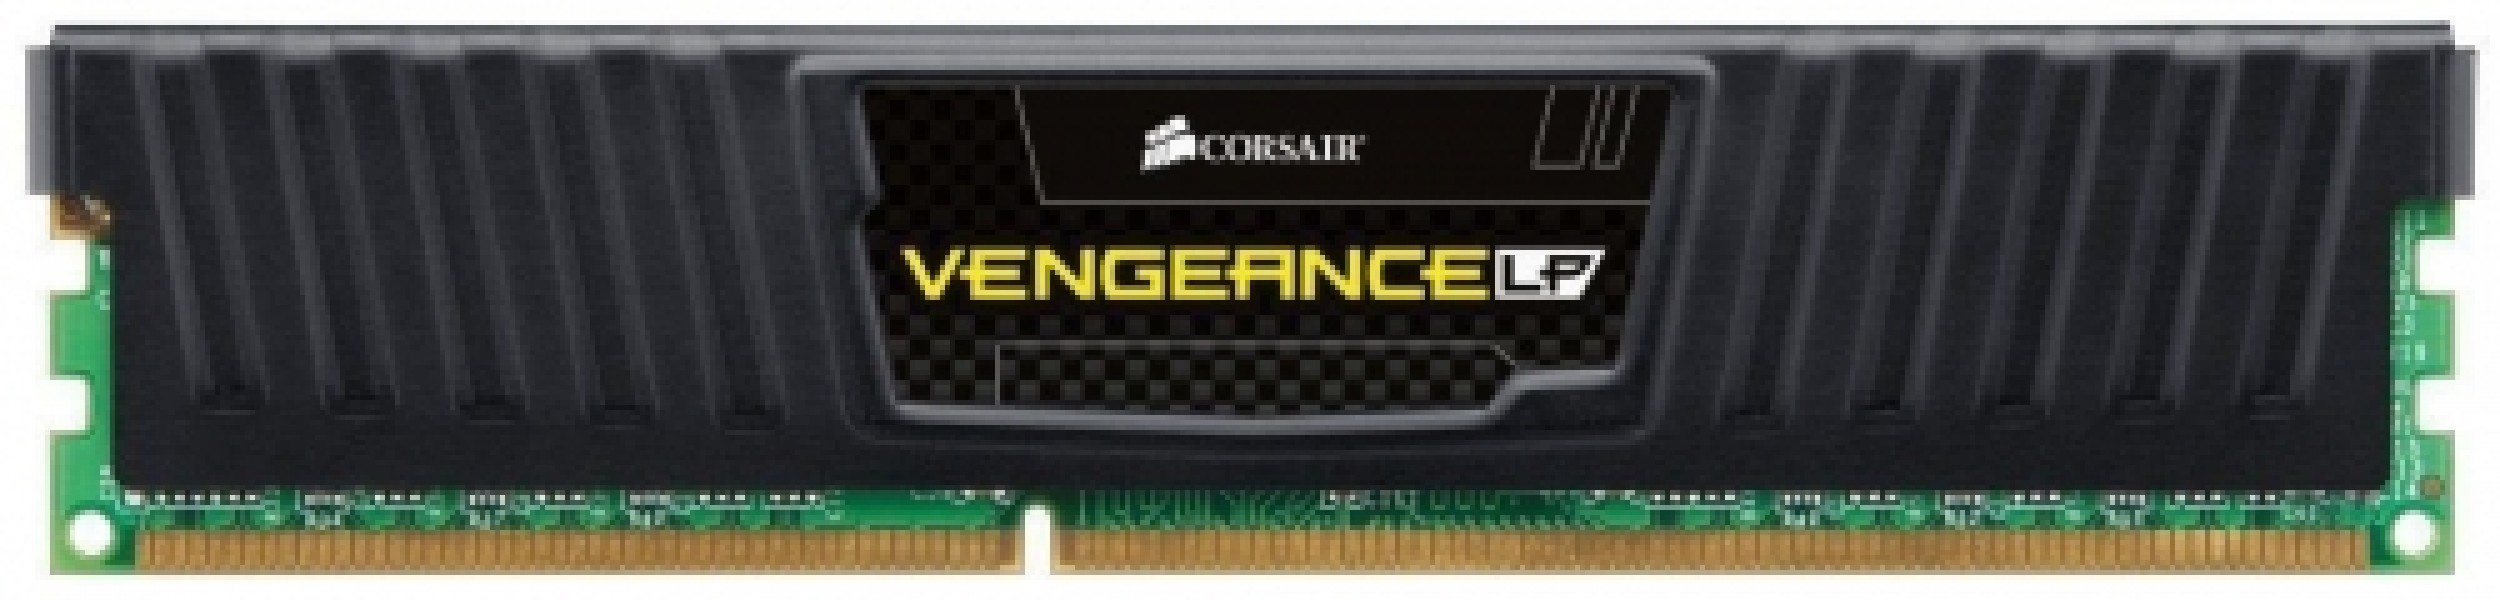 Corsair Vengeance LP 8GB 1600MHz DDR3 CML8GX3M1A1600C9